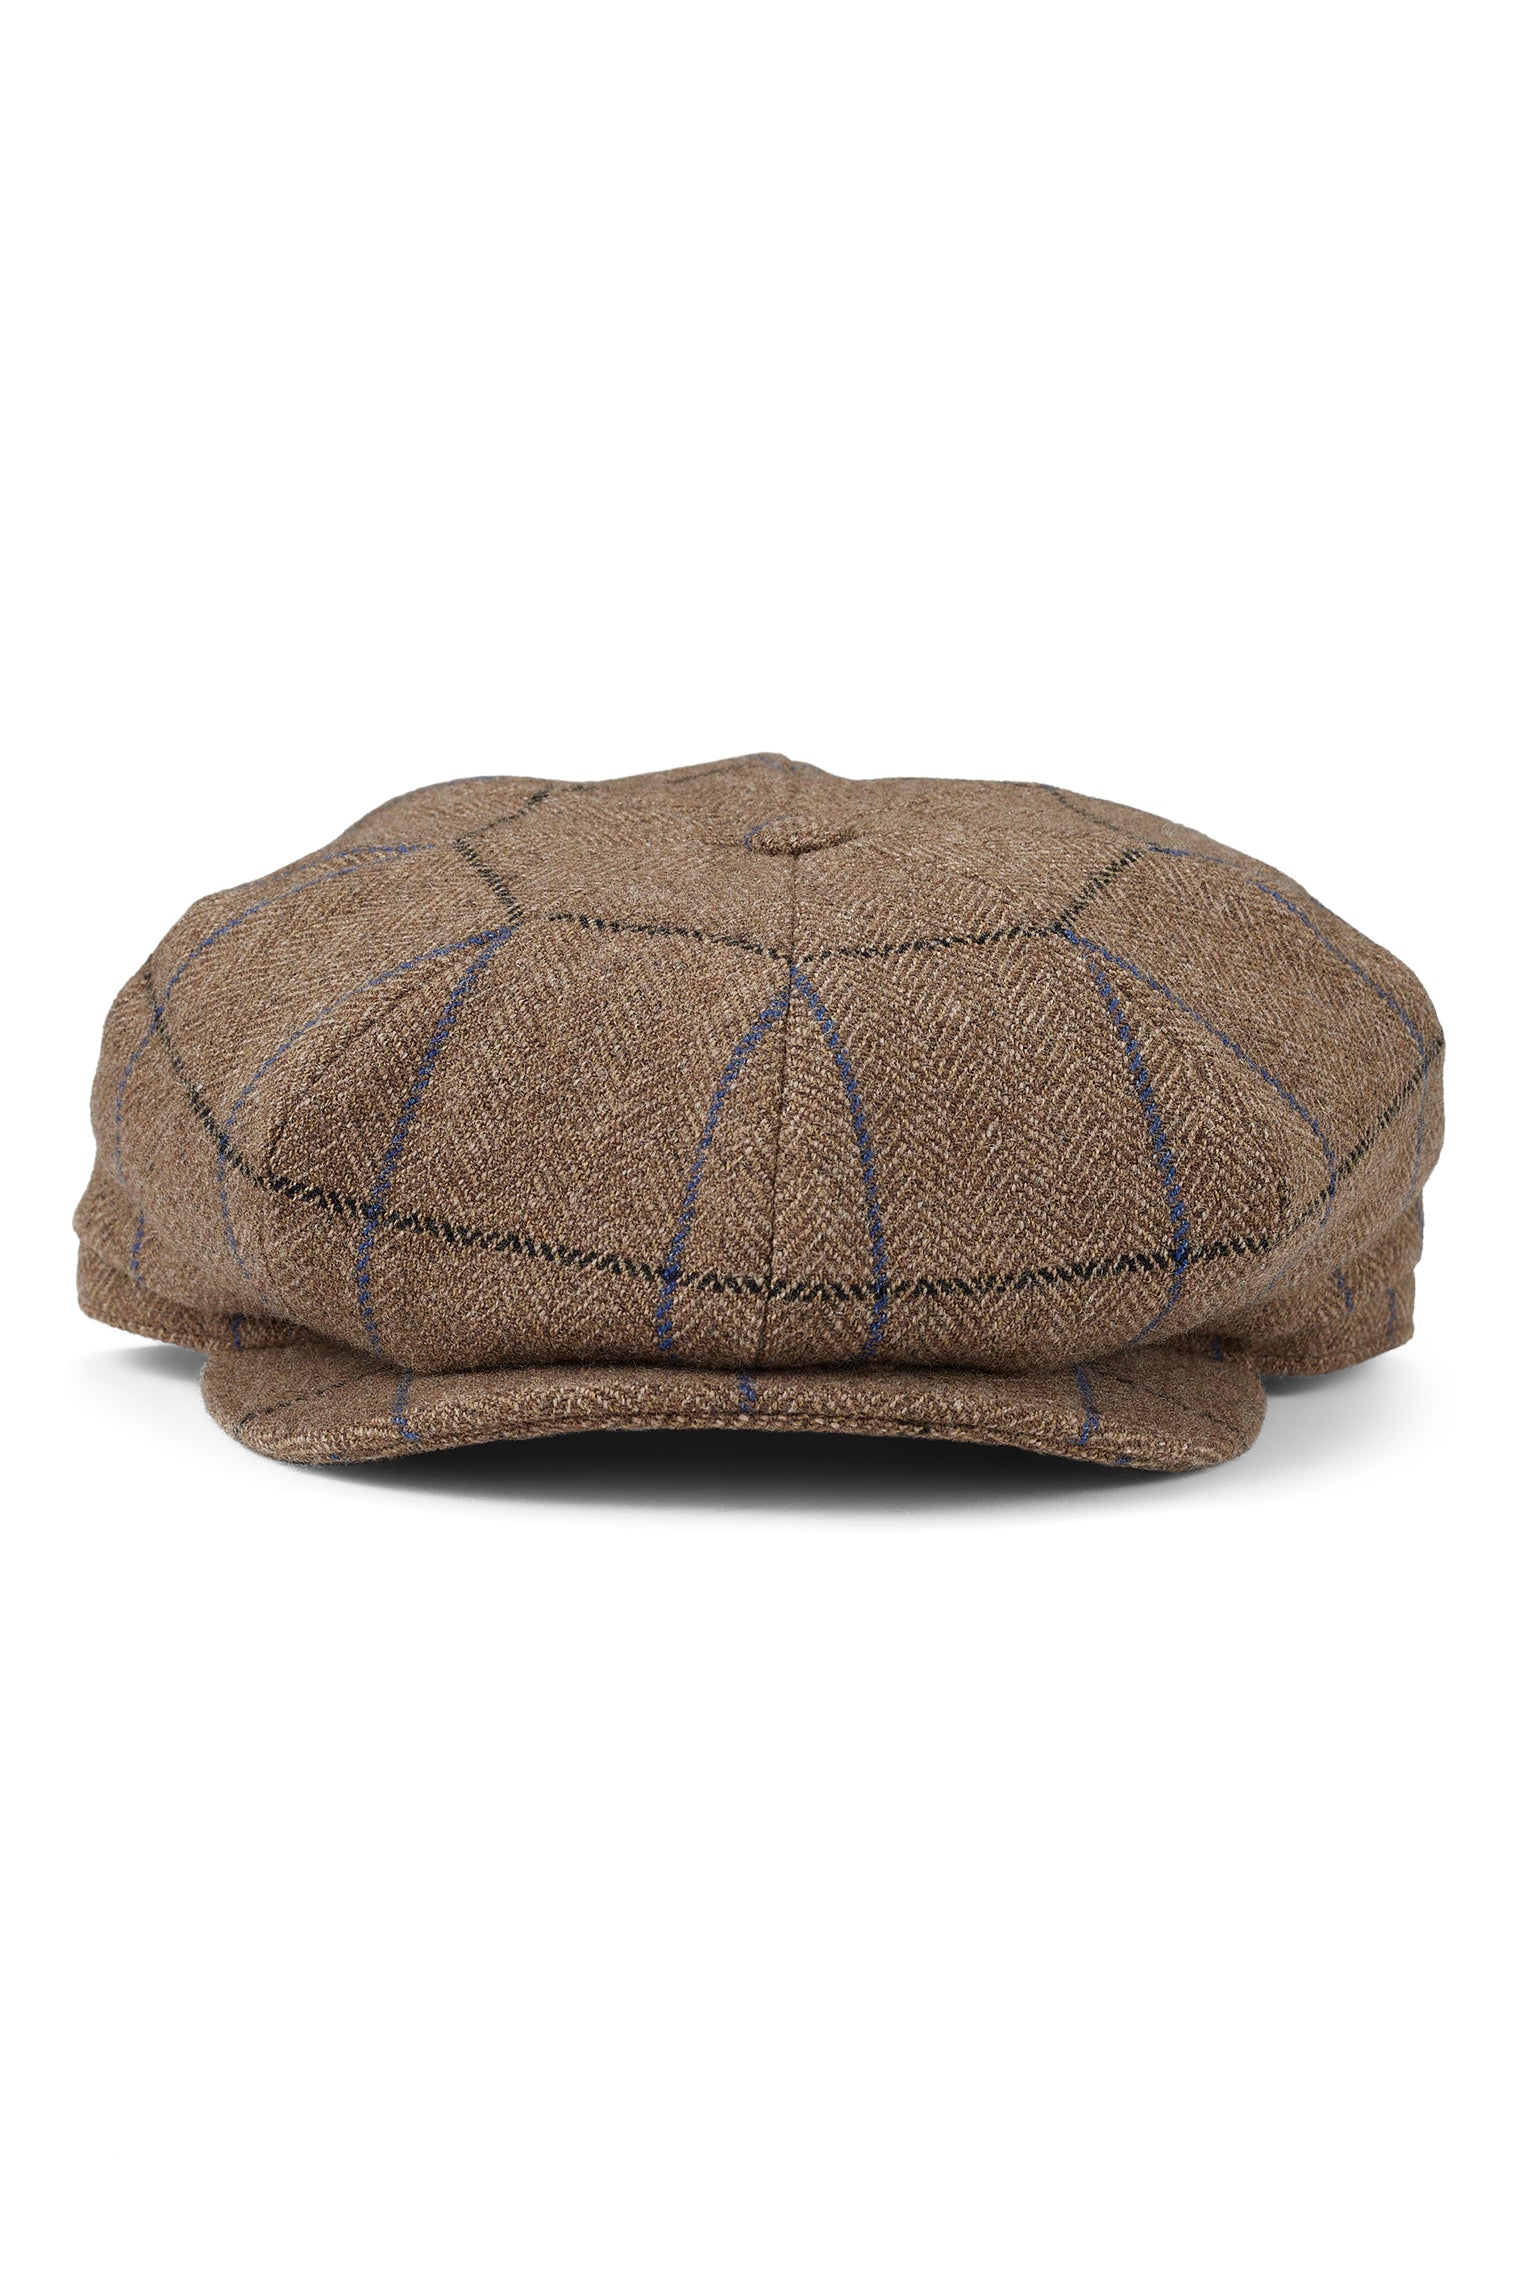 QEST Tremelo Bakerboy Cap - New Season Hat Collection - Lock & Co. Hatters London UK